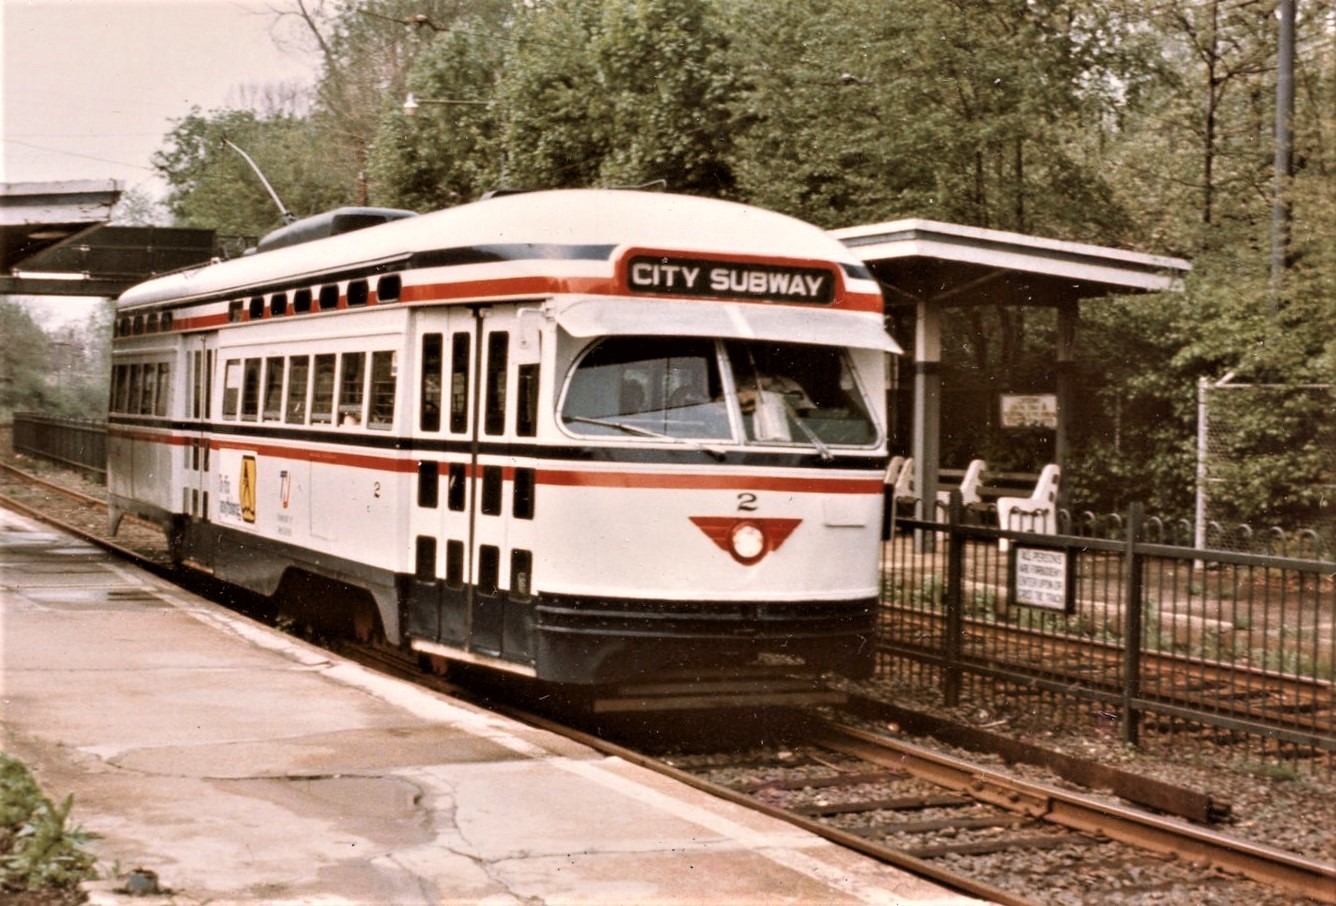 Public Service of New Jersey Co-ordinate Transport | Newark, New Jersey | Davenport Avenue Station | City Subway | PCC #2 | May 18, 1975 | Al Creamer photograph